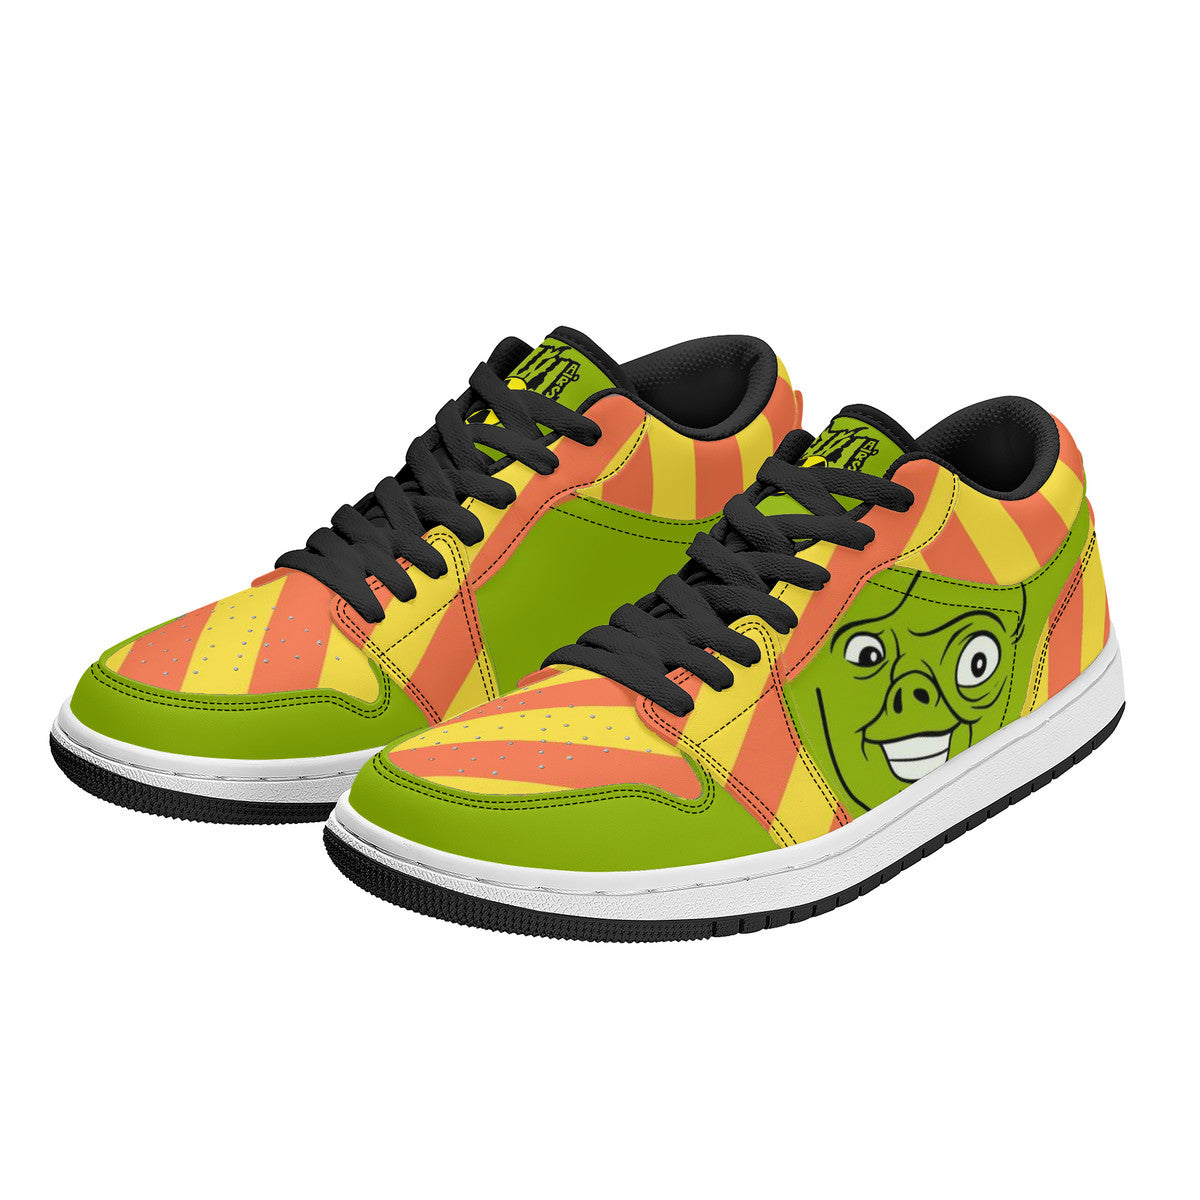 Bull Airs - Toxie Lite | Custom Branded Shoe | Shoe Zero